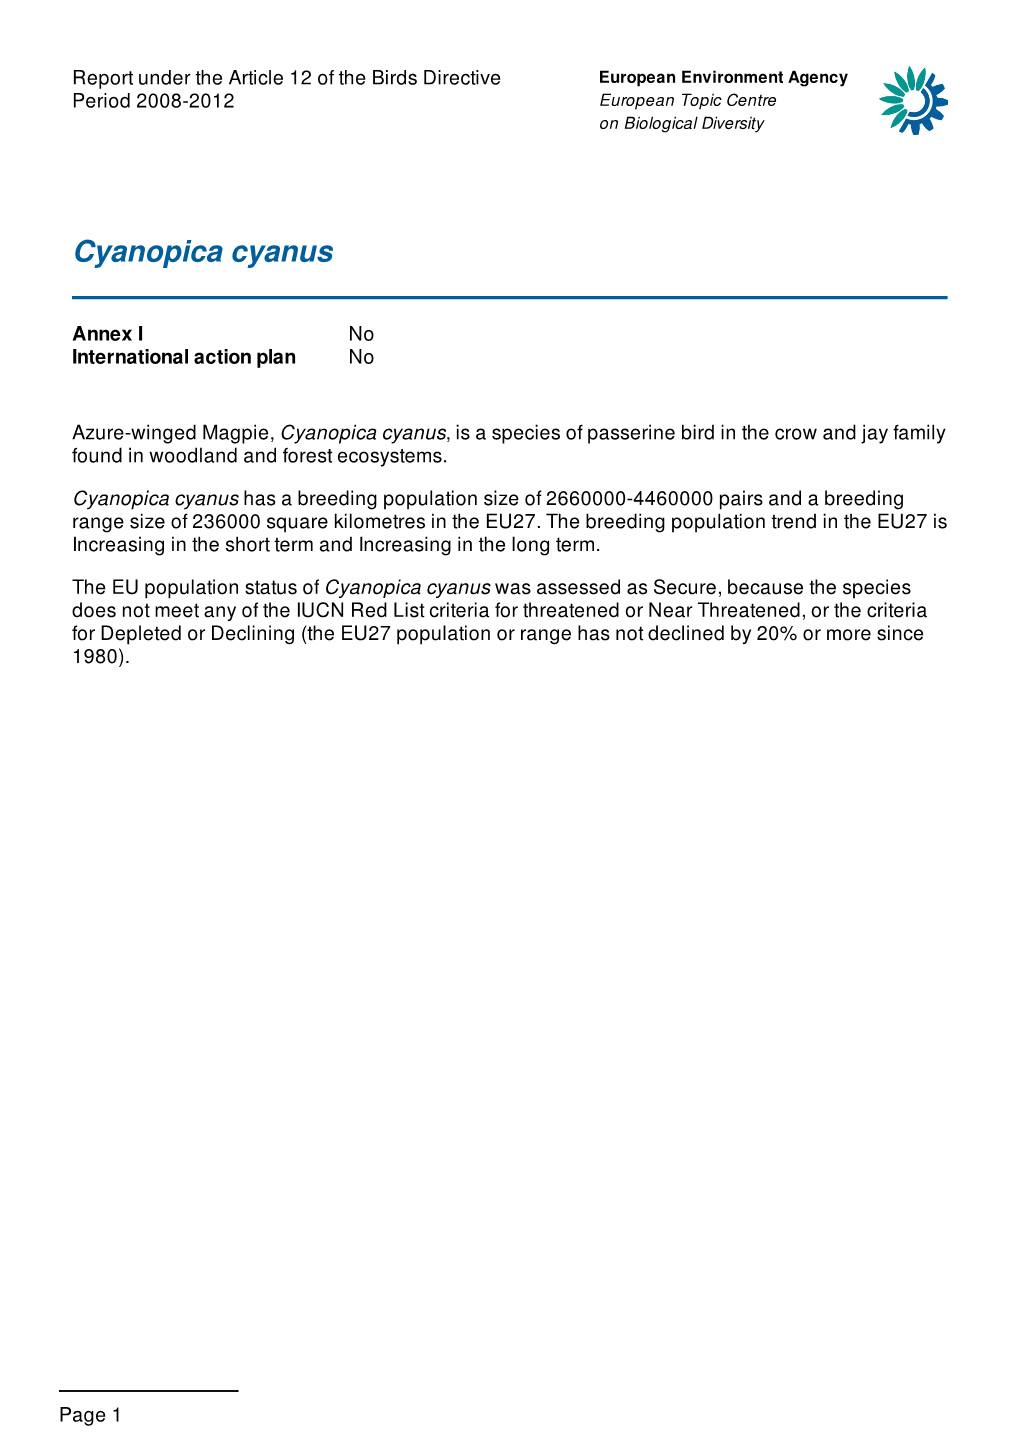 Cyanopica Cyanus